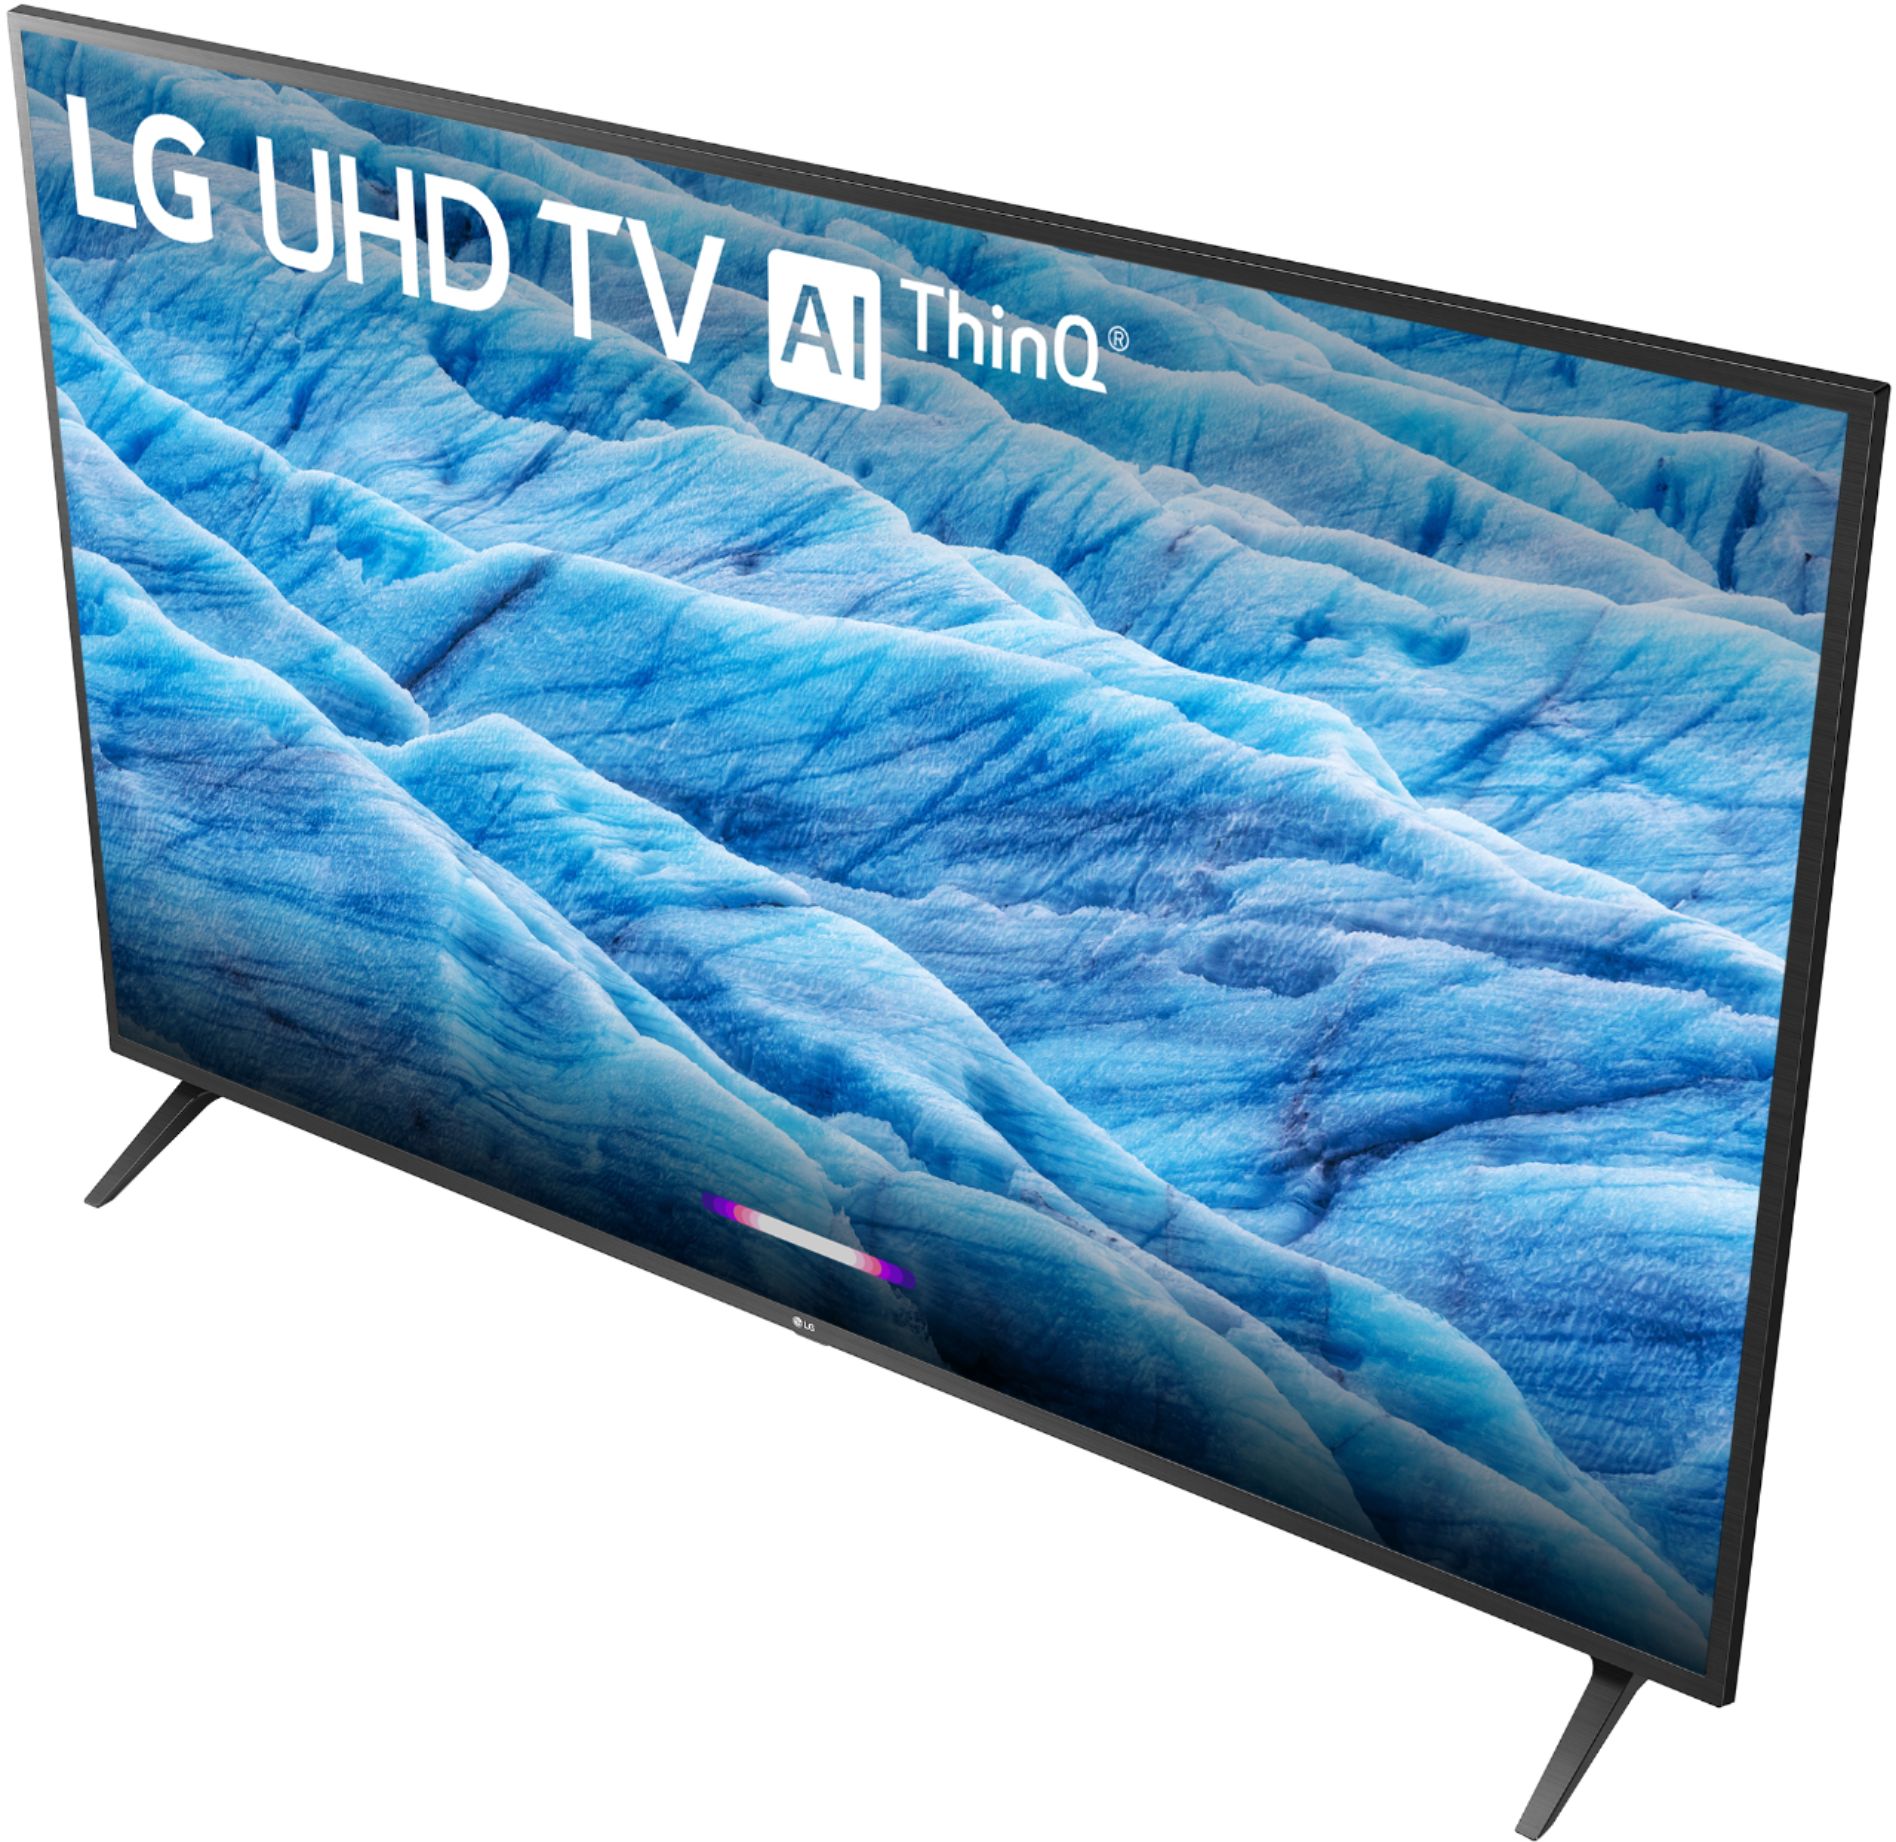 LG 43 Class 4K UHD 2160P Smart TV 43UN7300PUF 2020 Model